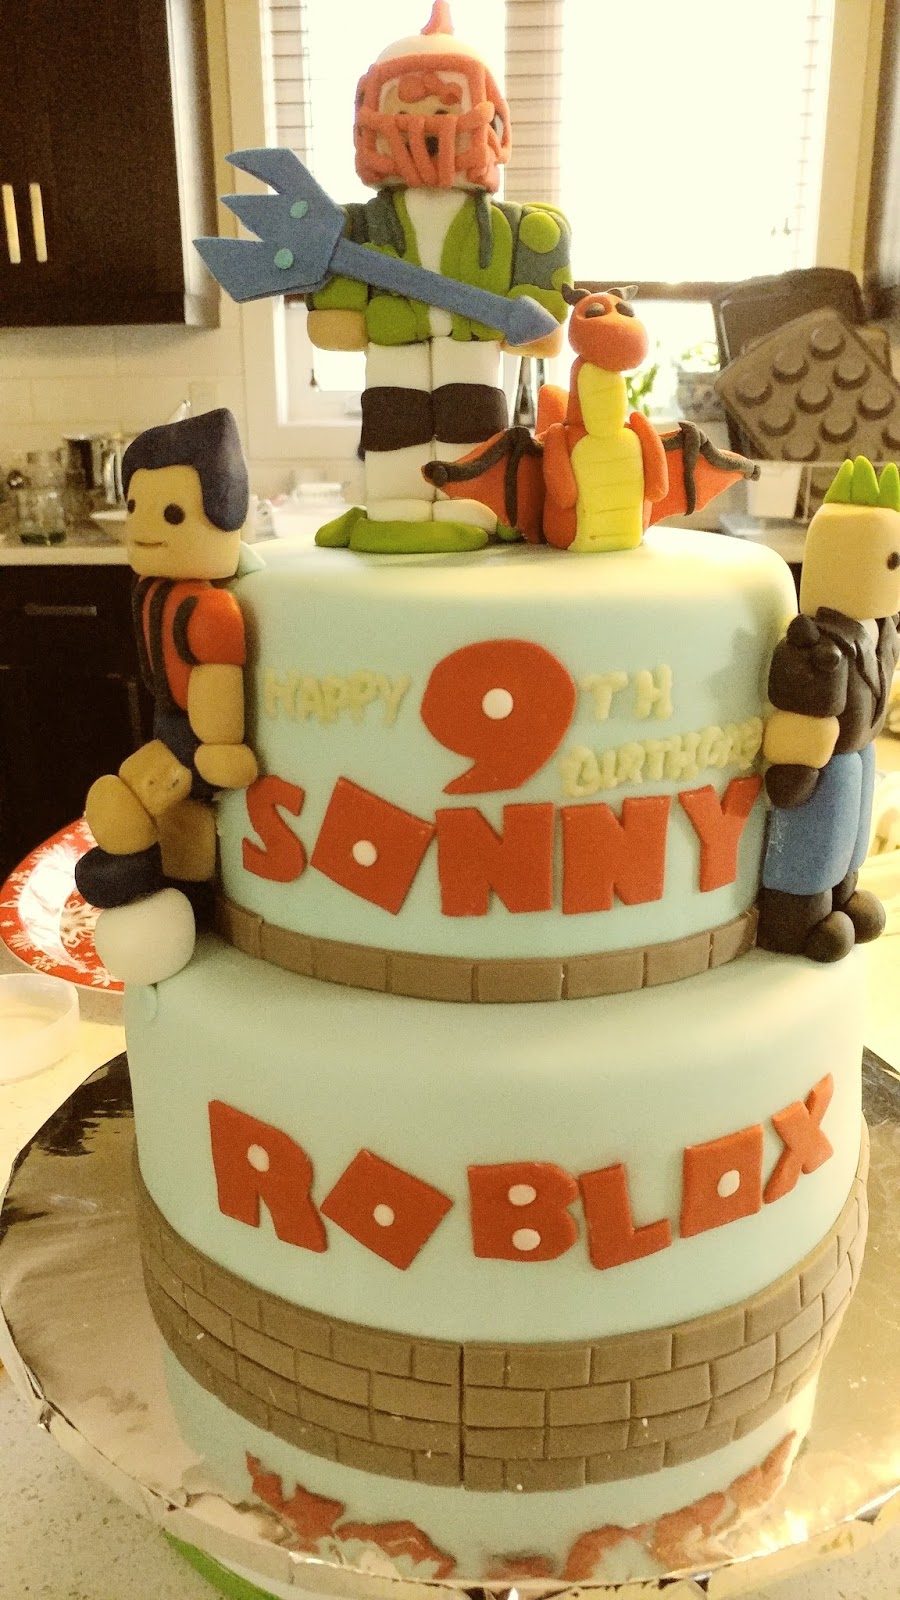 Roblox 2 Tier Cake - roblox cake youtube in 2020 roblox cake roblox birthday cake cake